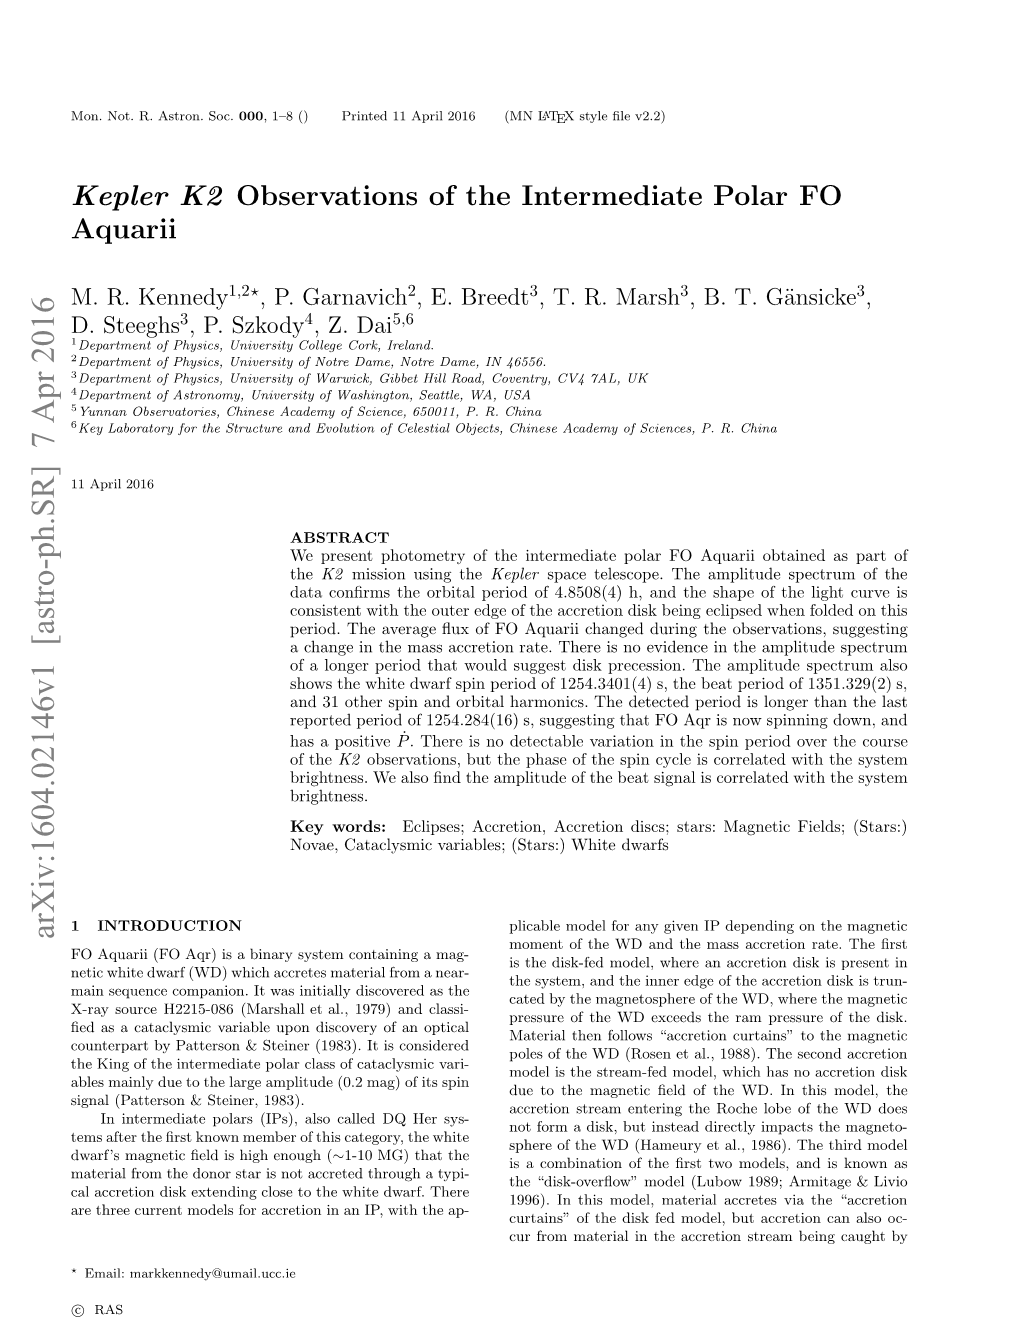 Kepler K2 Observations of the Intermediate Polar FO Aquarii 3